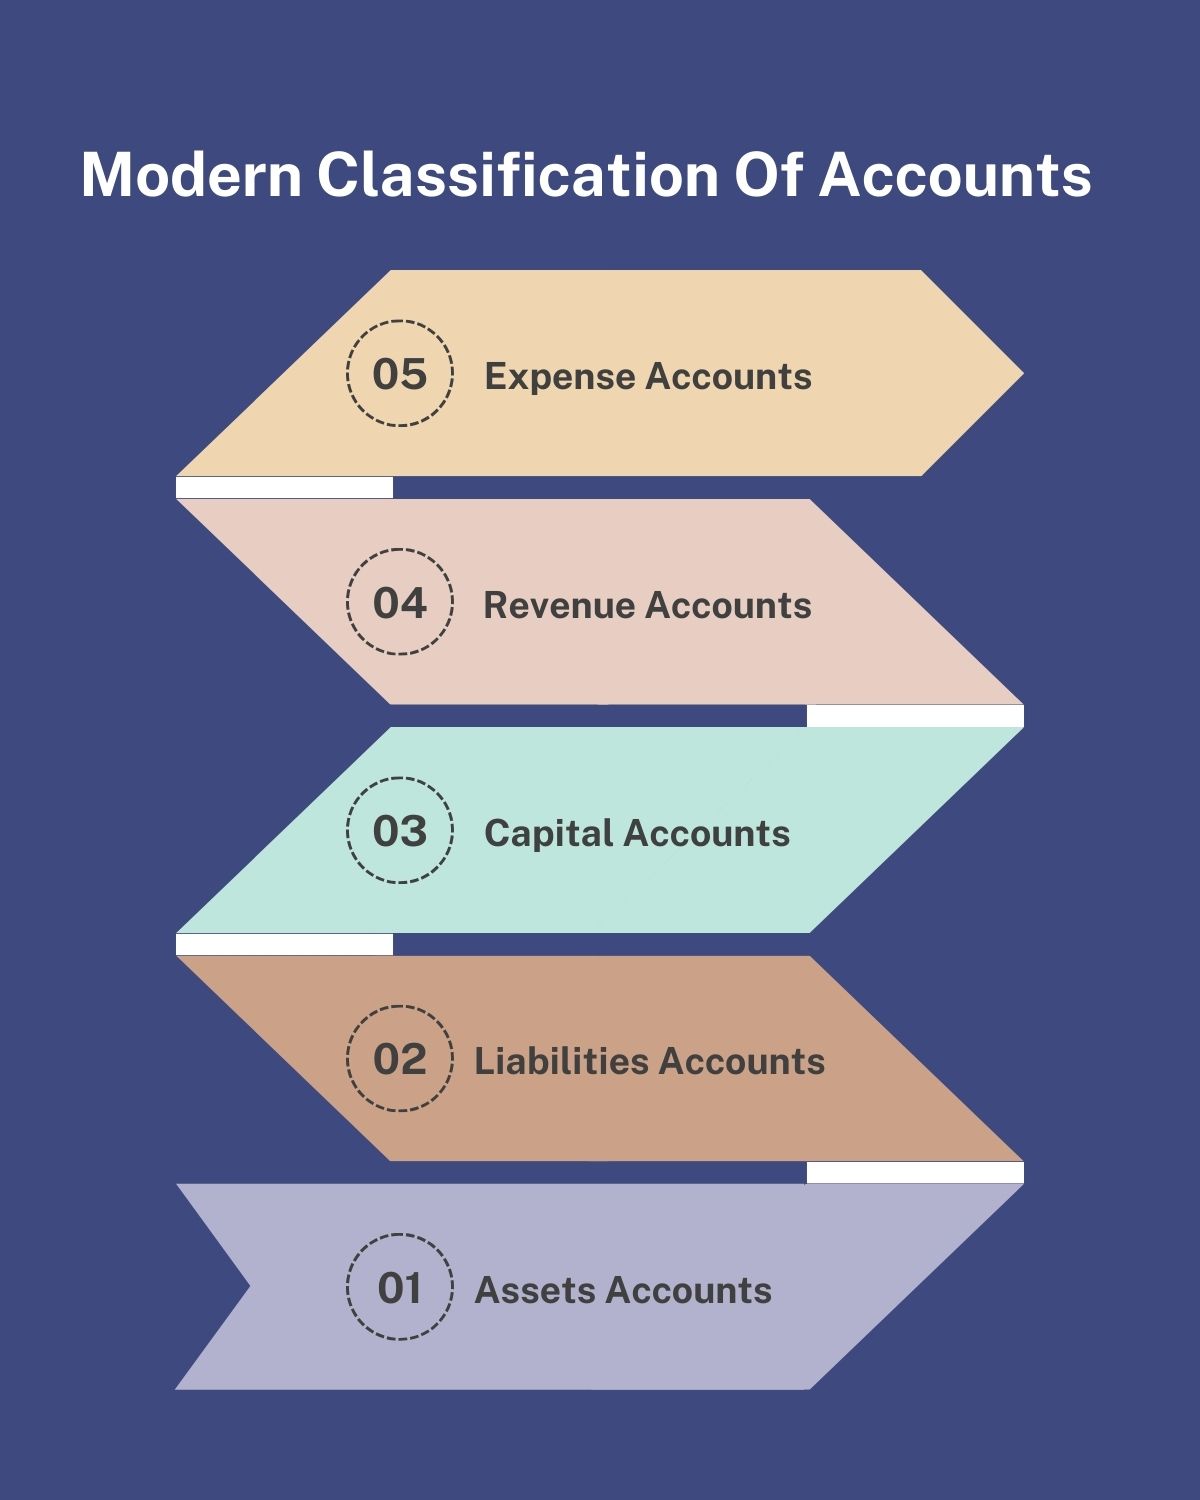 Modern Classification of Accounts